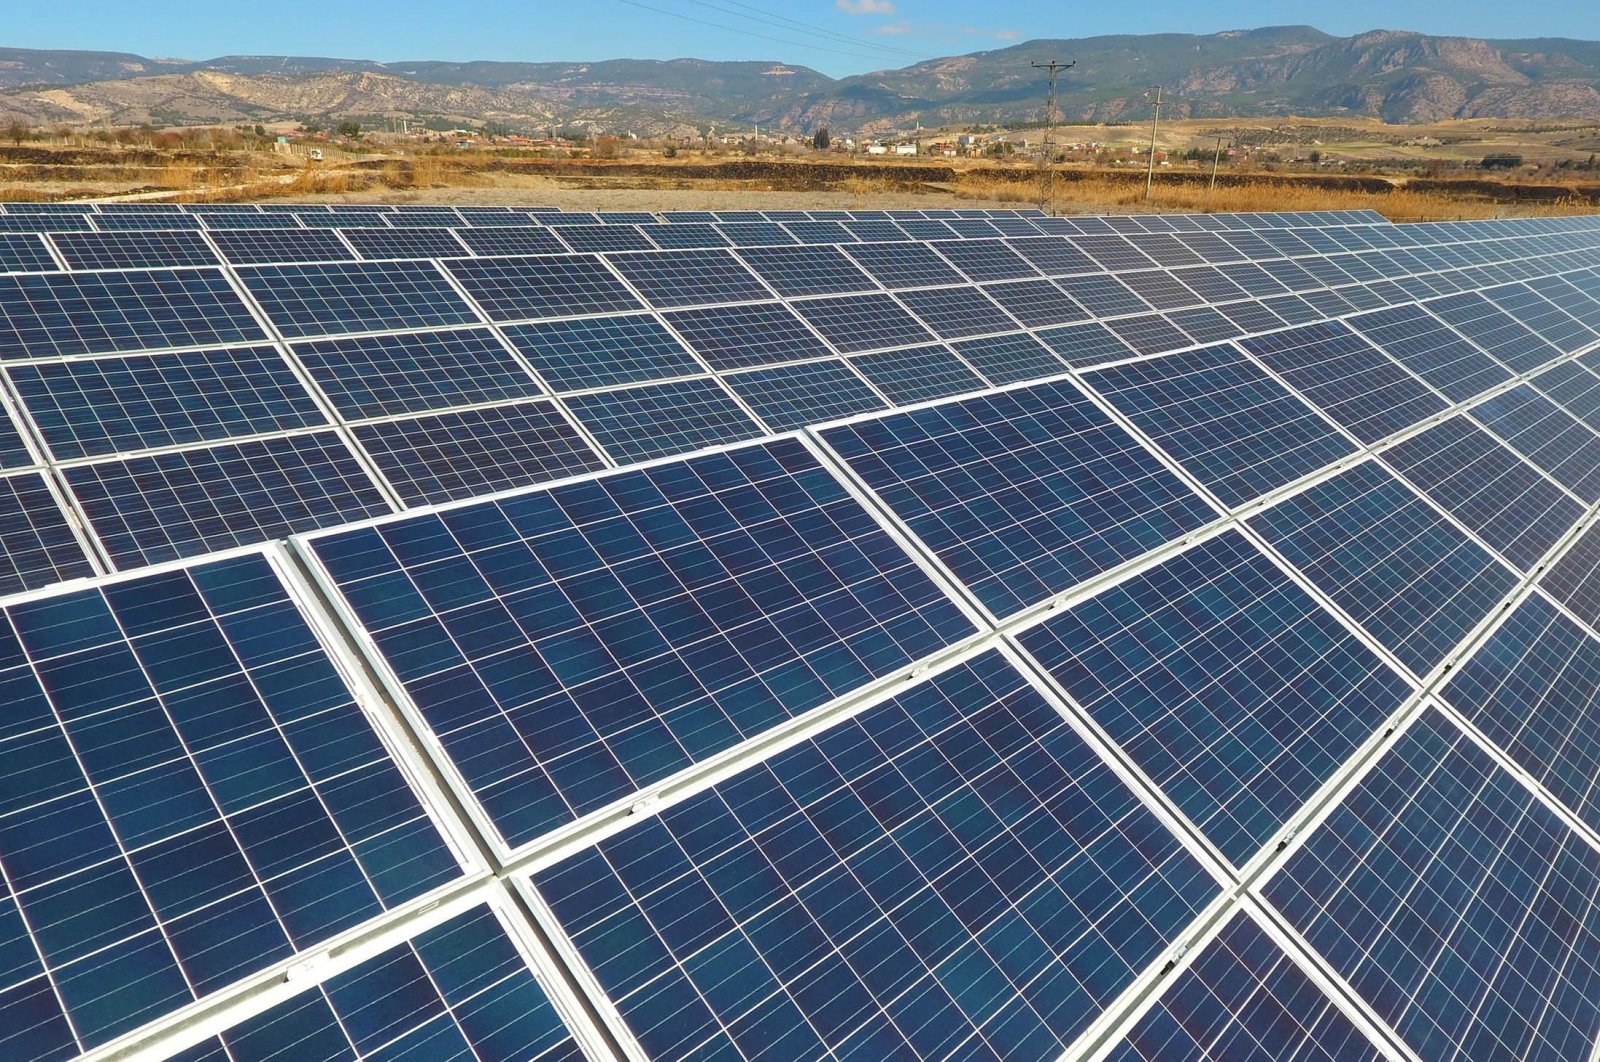 Solar panels in Turkey's western Denizli province, April 21, 2017. (DHA Photo)